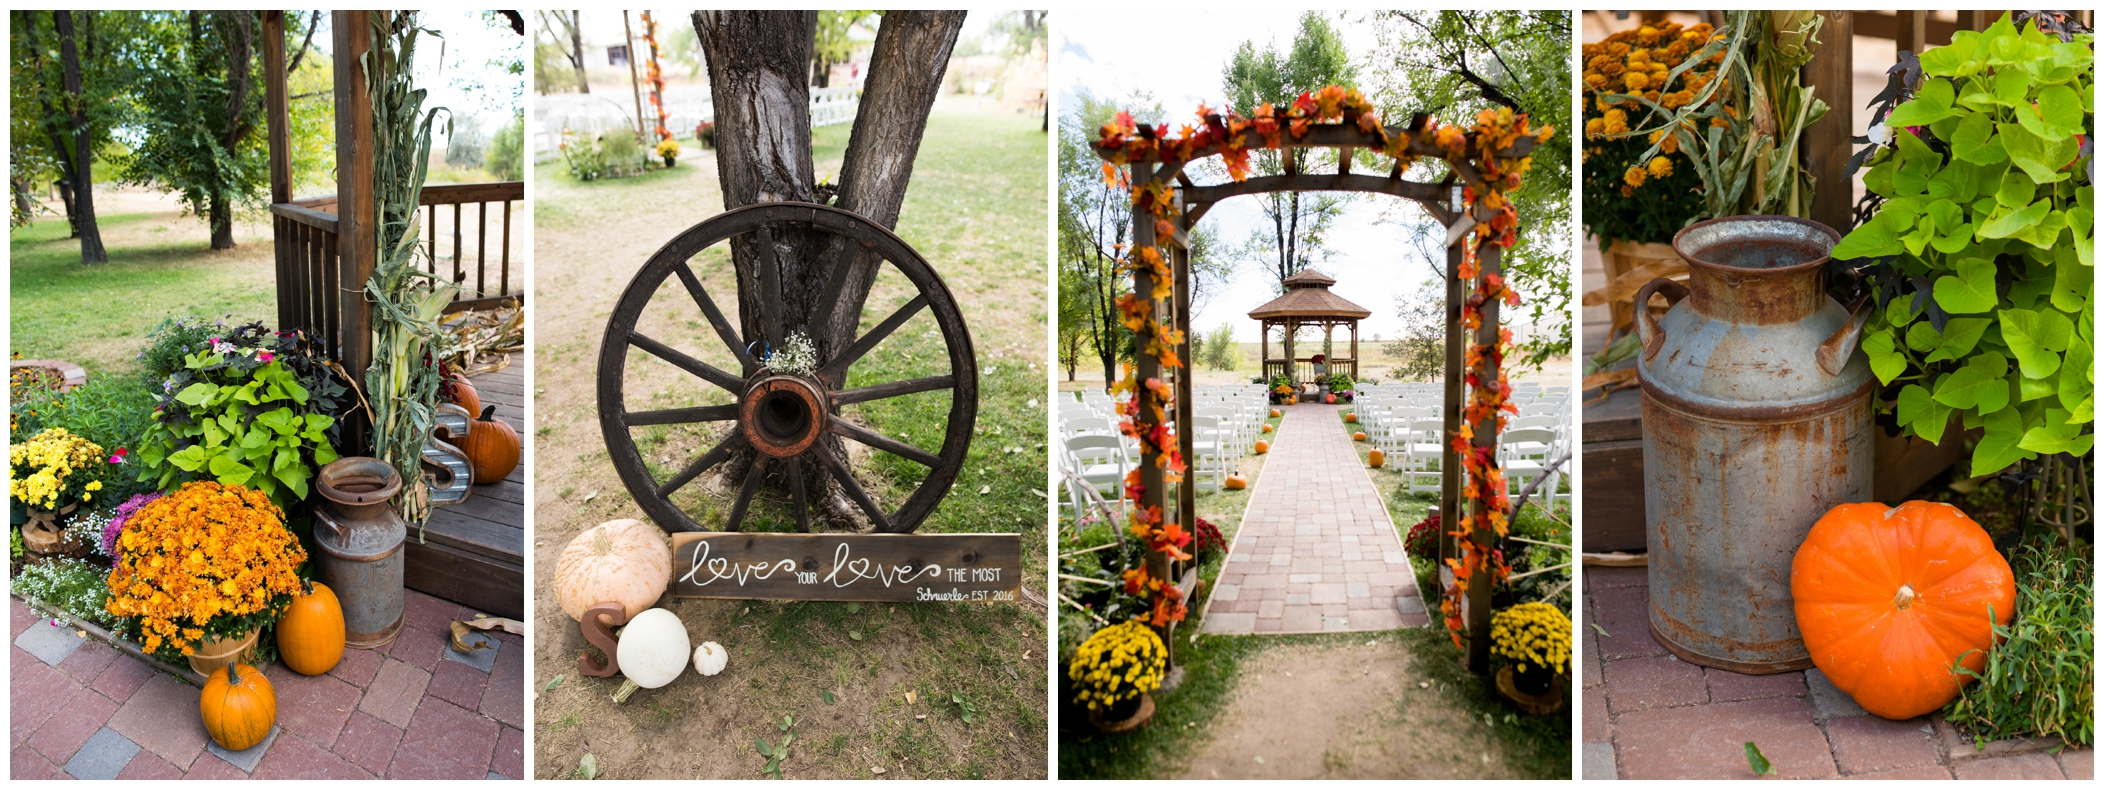 Country Kiss Weddings photos by Colorado wedding photographer Plum Pretty Photography